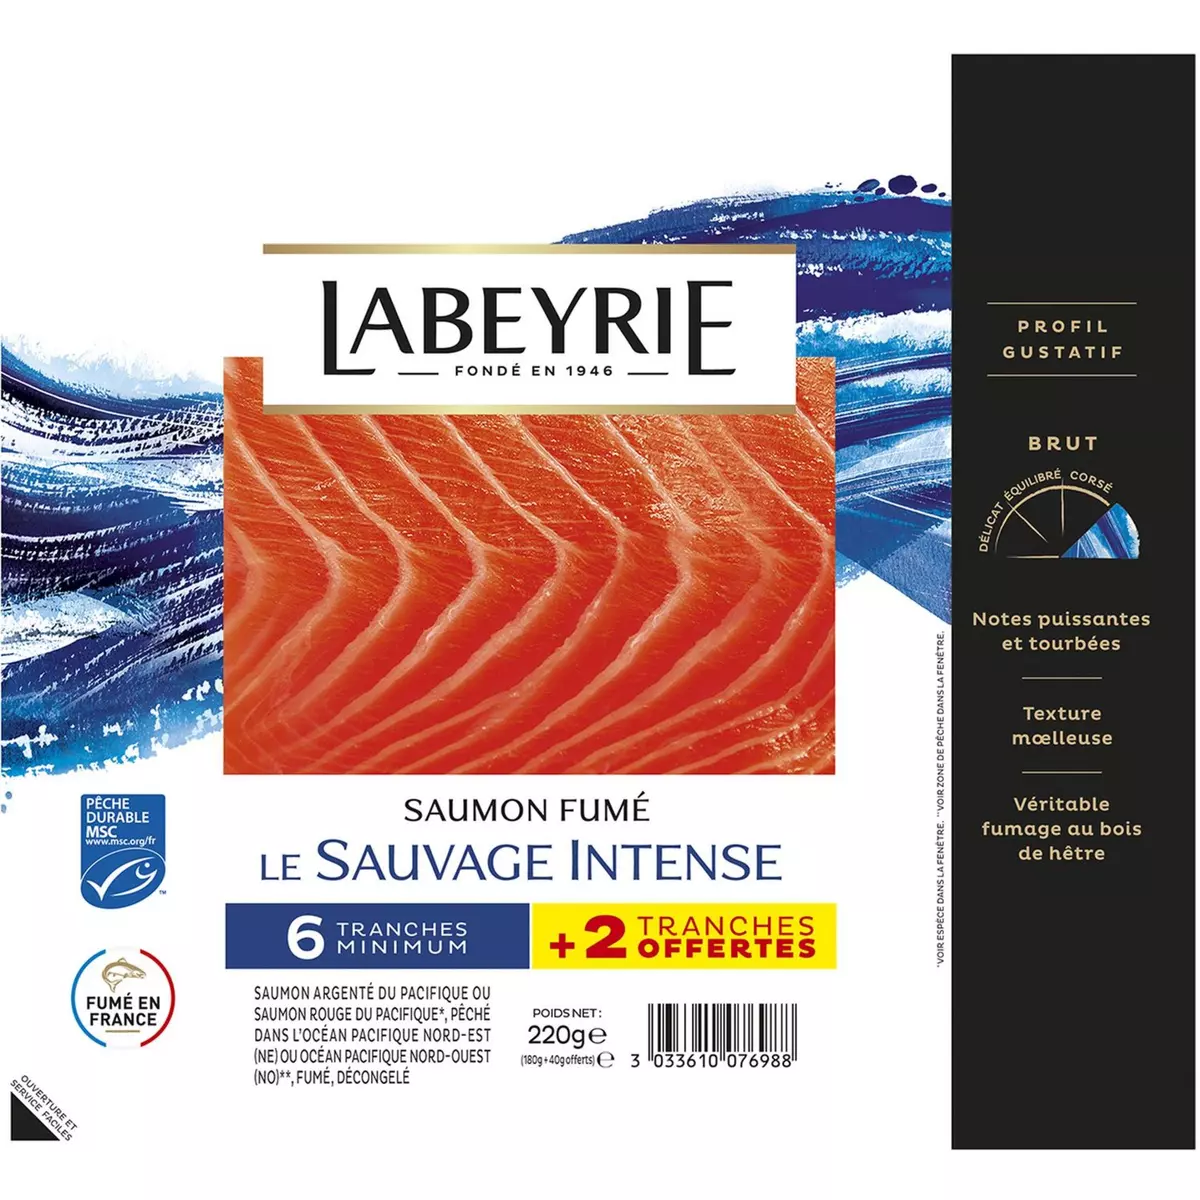 LABEYRIE Le Sauvage Intense Saumon fumé 6 tranches +2 offertes 220g